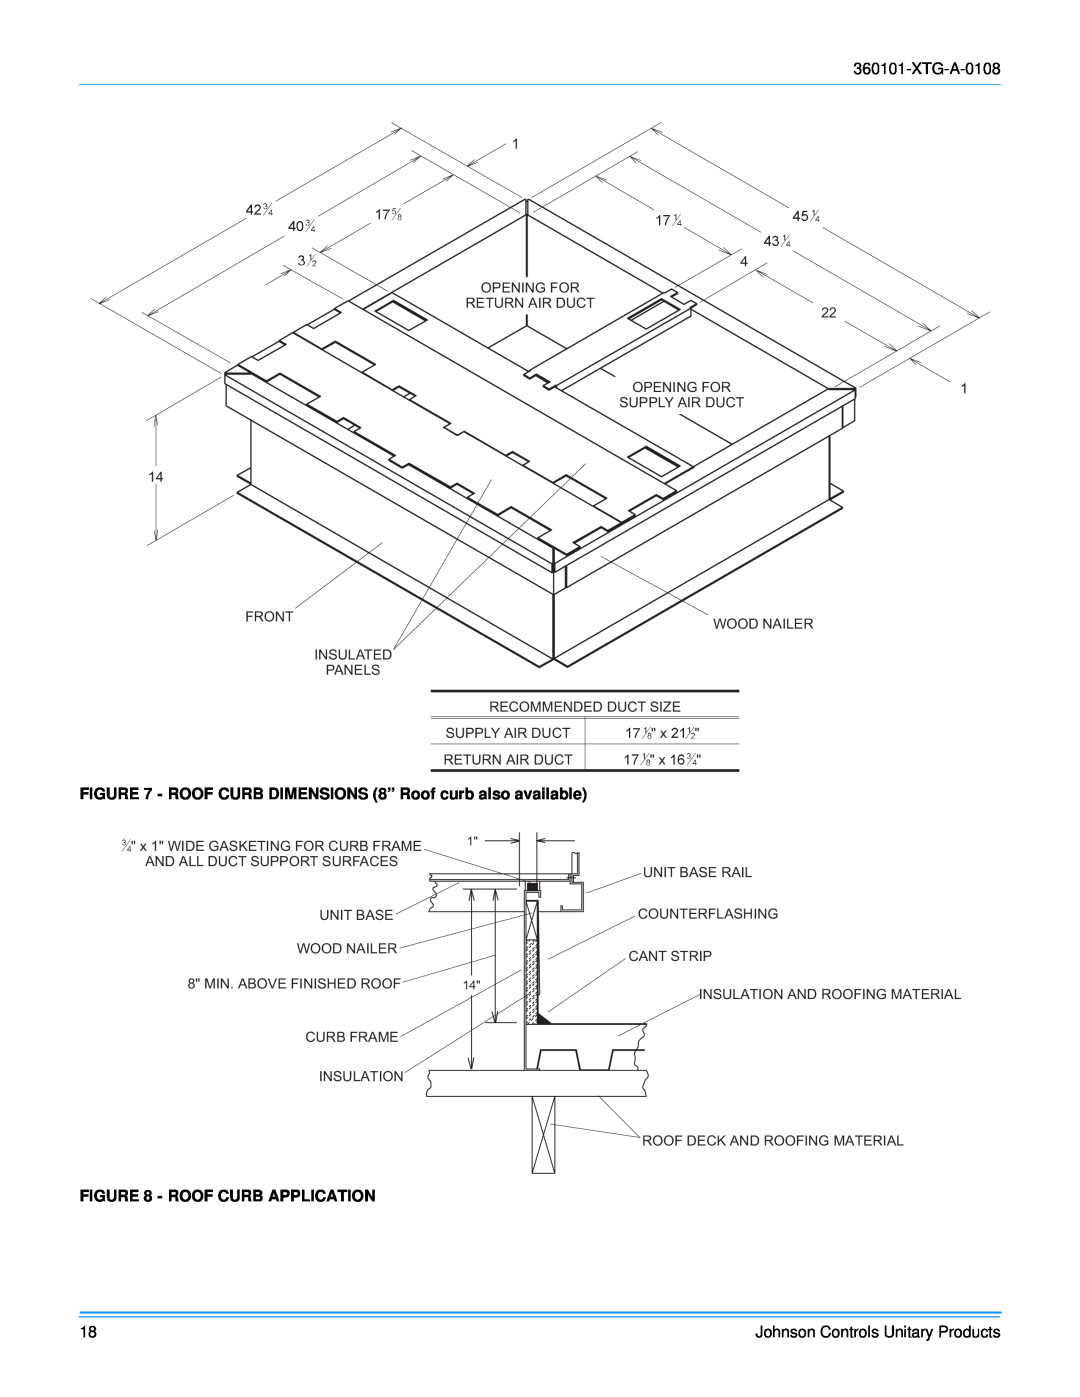 York 360101-XTG-A-0108 manual Roof Curb Application 